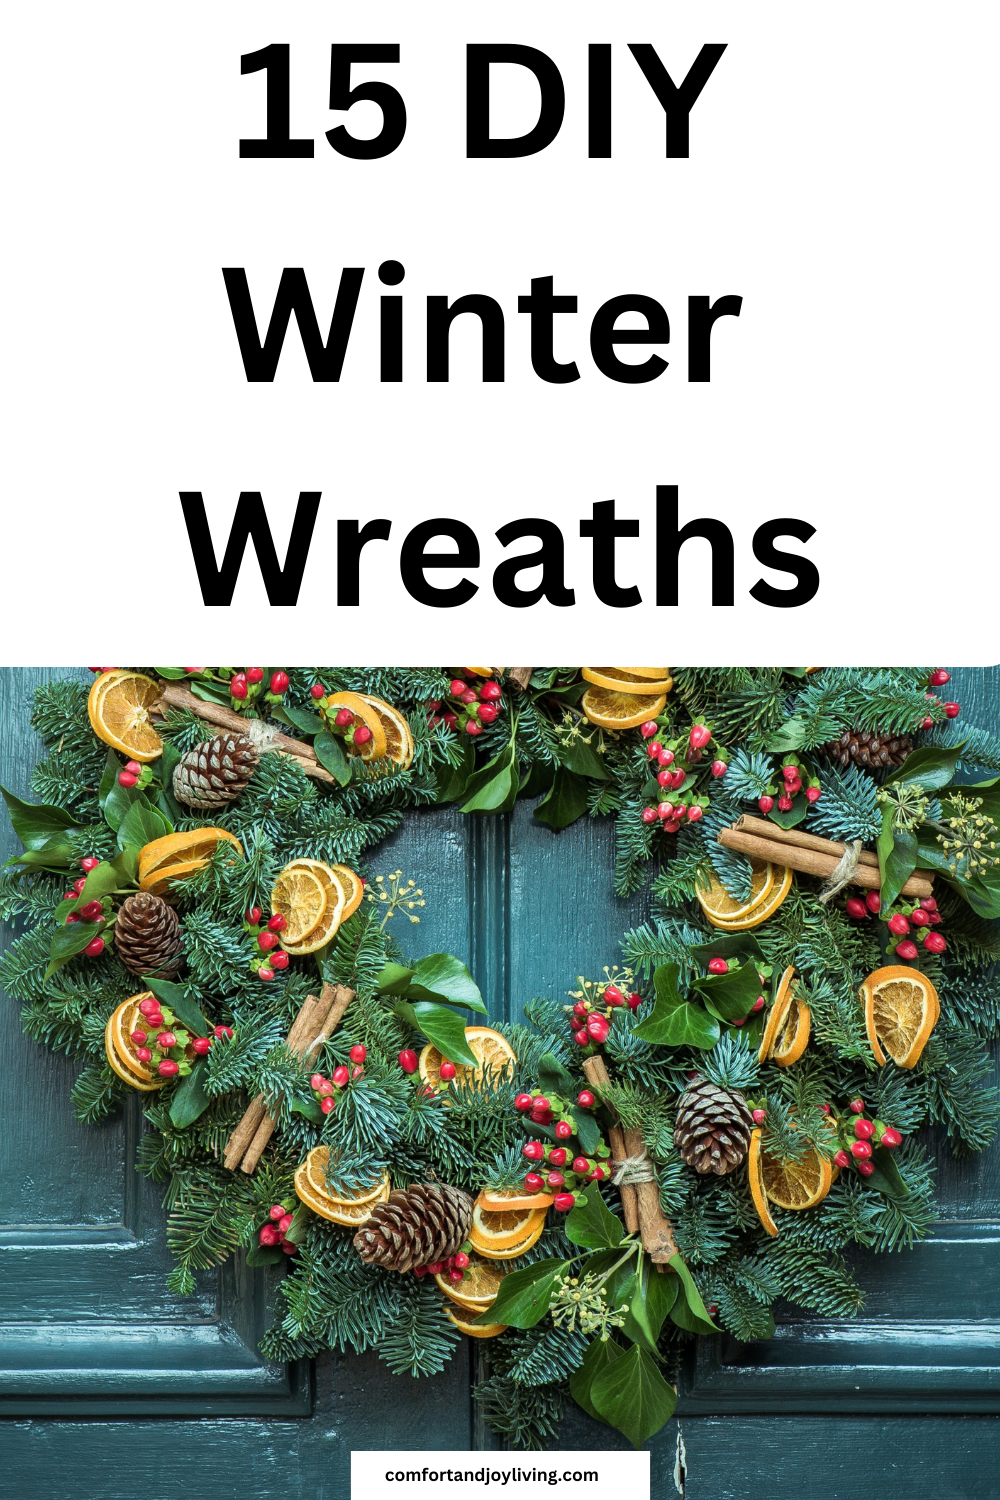 15 DIY Winter Wreaths